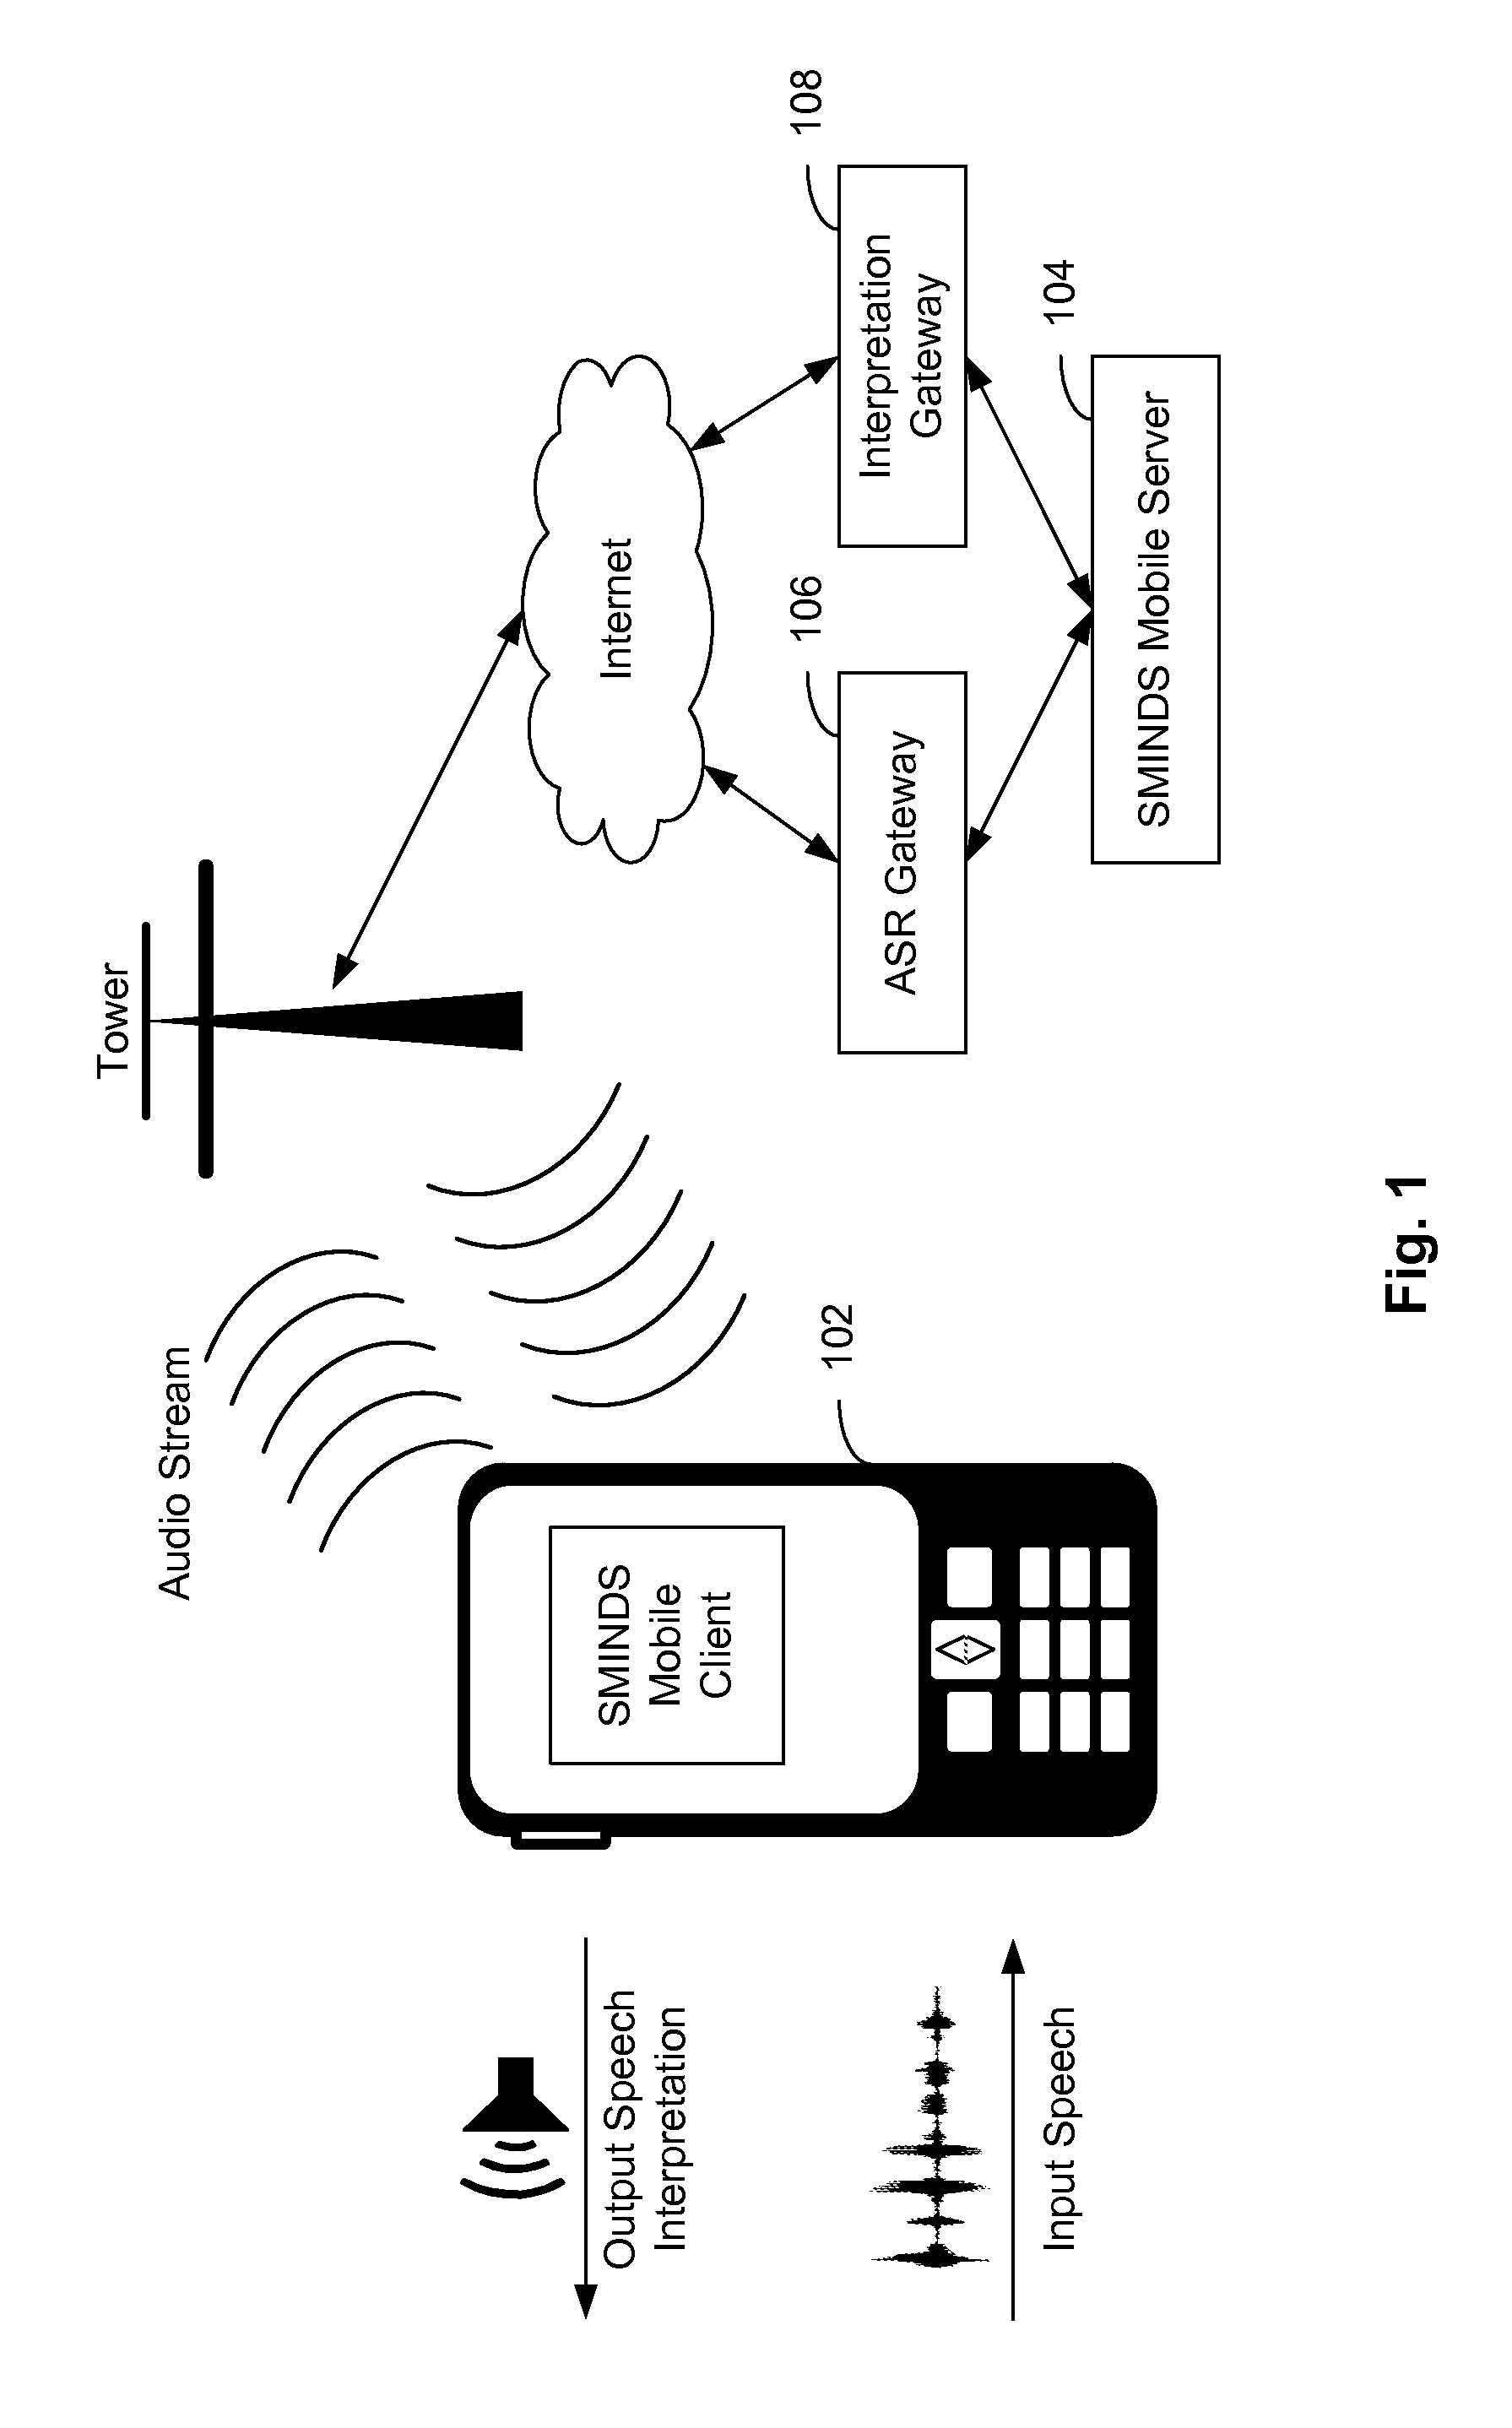 Mobile Speech-to-Speech Interpretation System